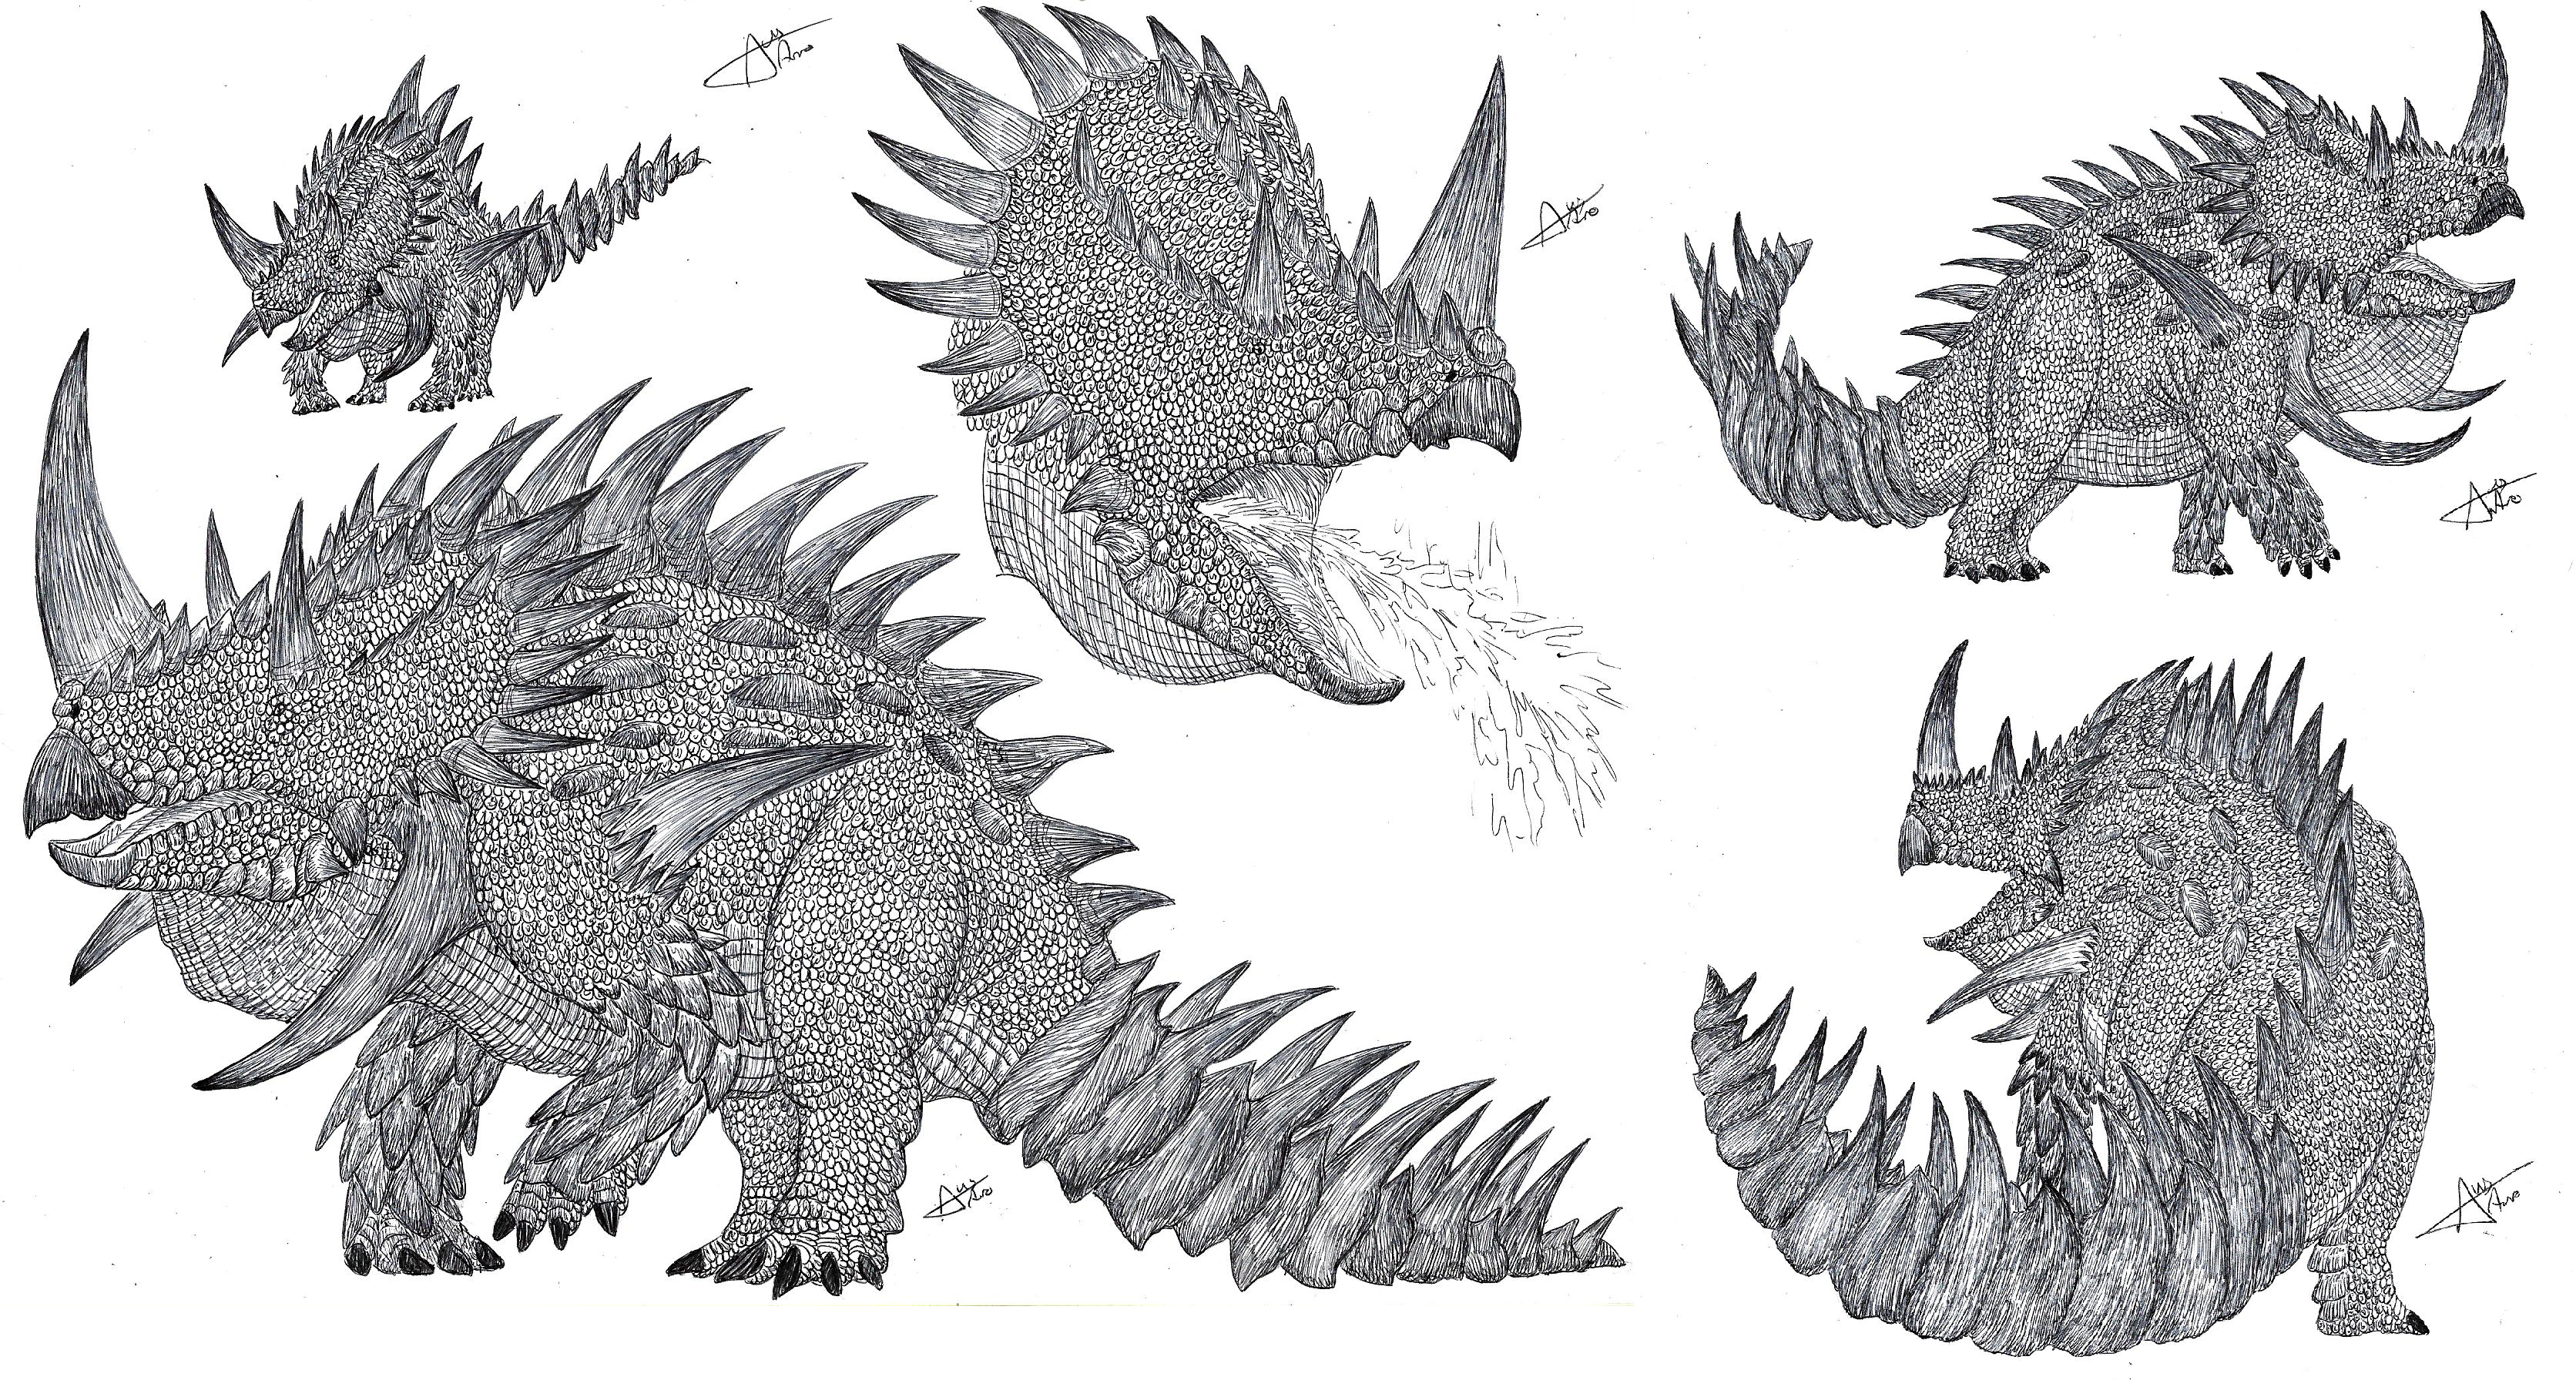 Godzilla vs Titanus Mokele Mbembe sketch by me.Any suggestions